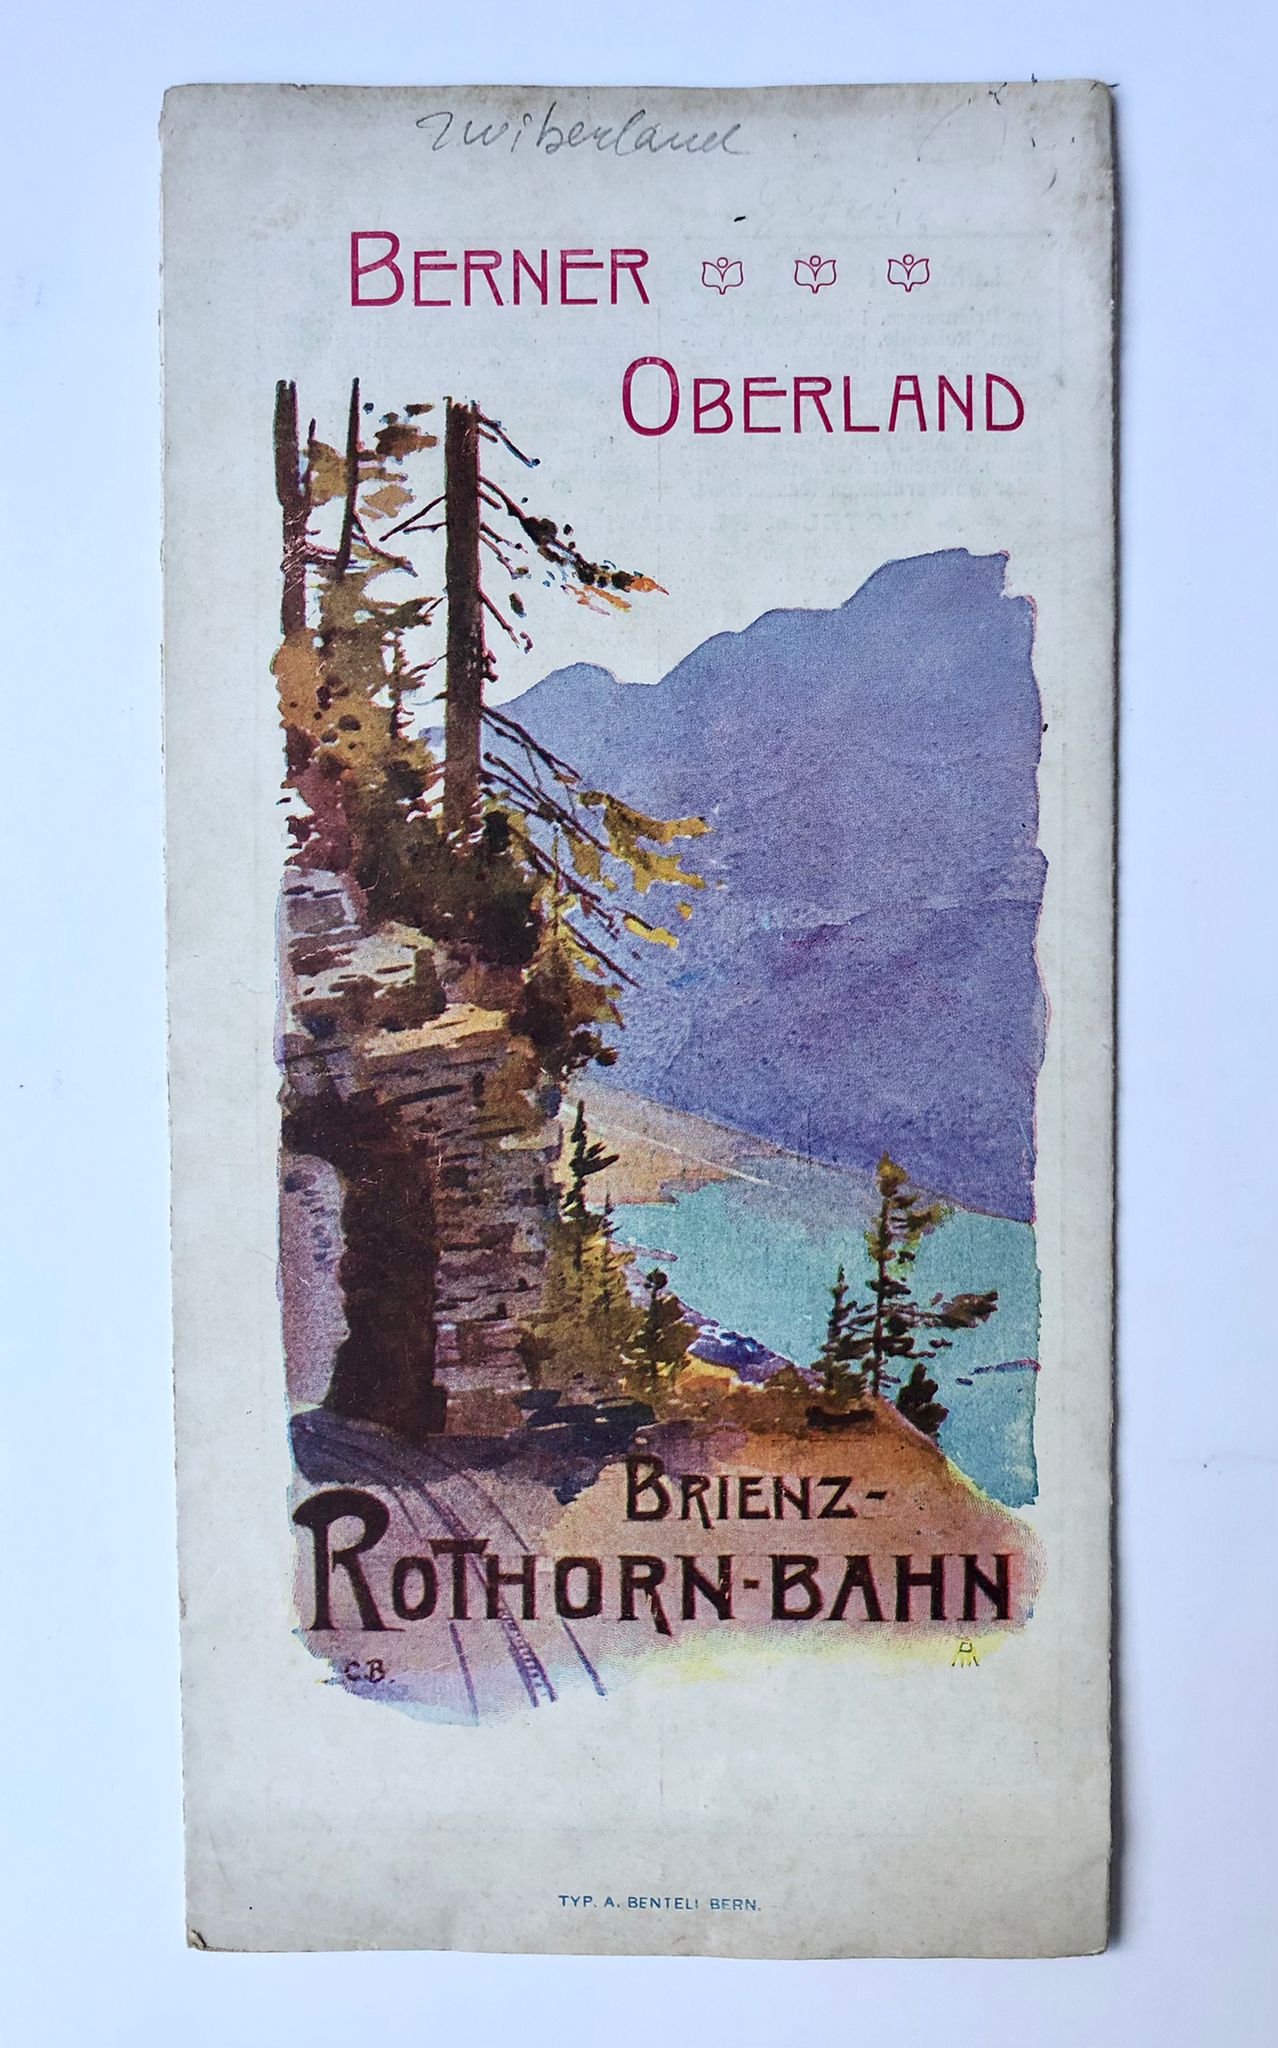 [Switzerland] Berner Oberland, Brienz-Rothorn-Bahn, Zwitserland, Typ. A. Benteli Bern, 6 pp.